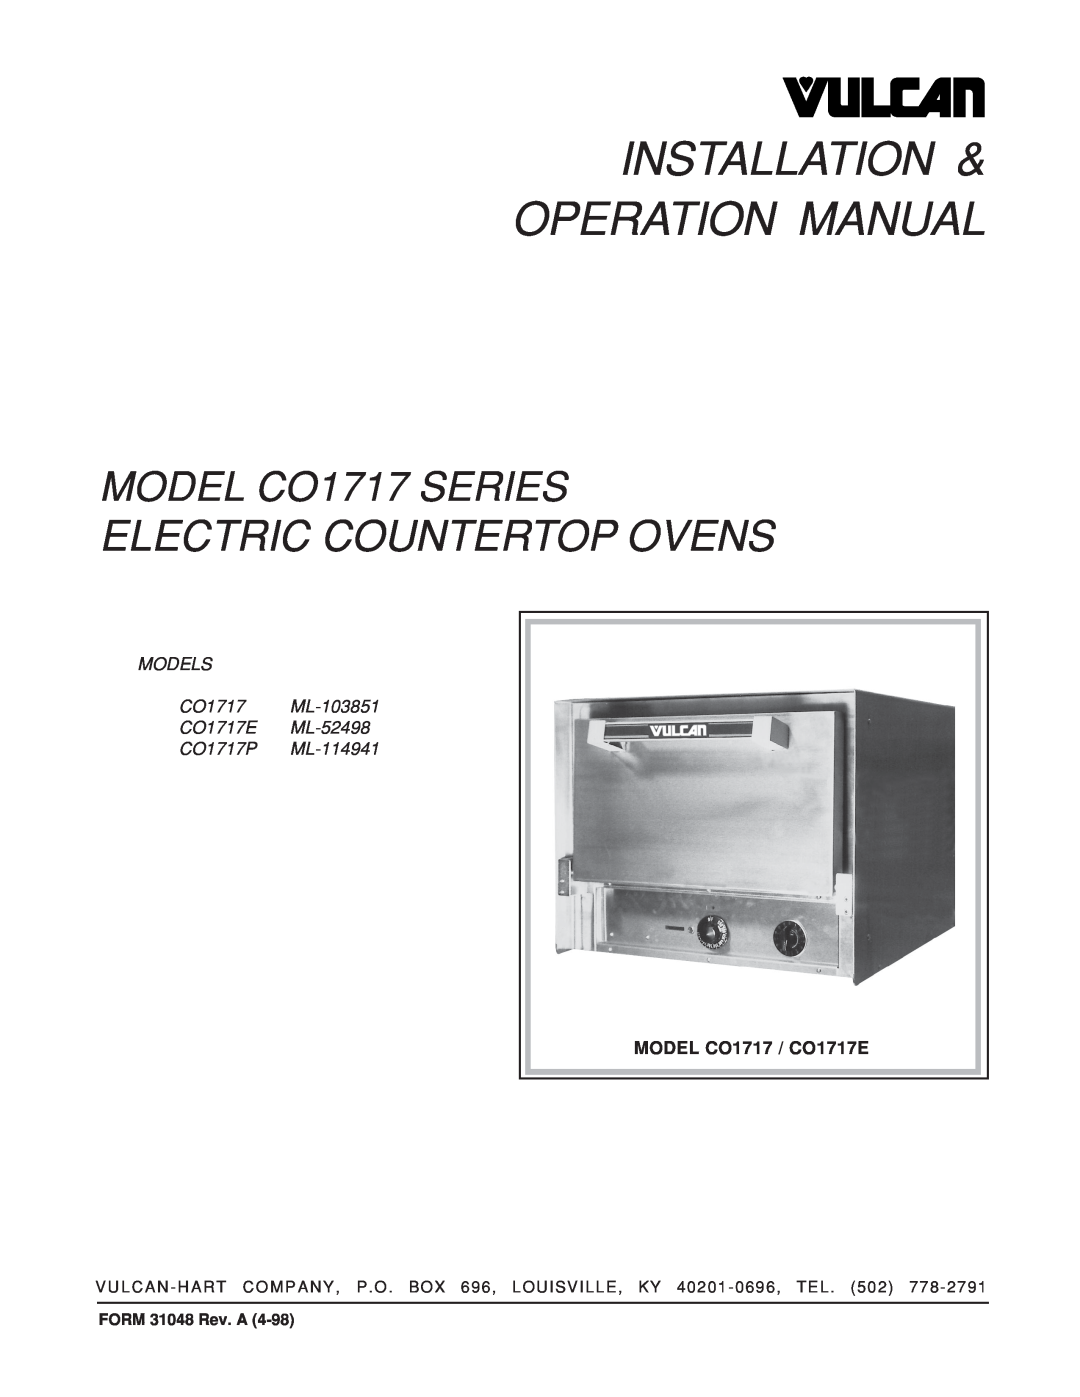 Vulcan-Hart CO1717E operation manual Electric Countertop Ovens, MODEL CO1717 SERIES, CO1717P ML-114941, FORM 31048 Rev. A 